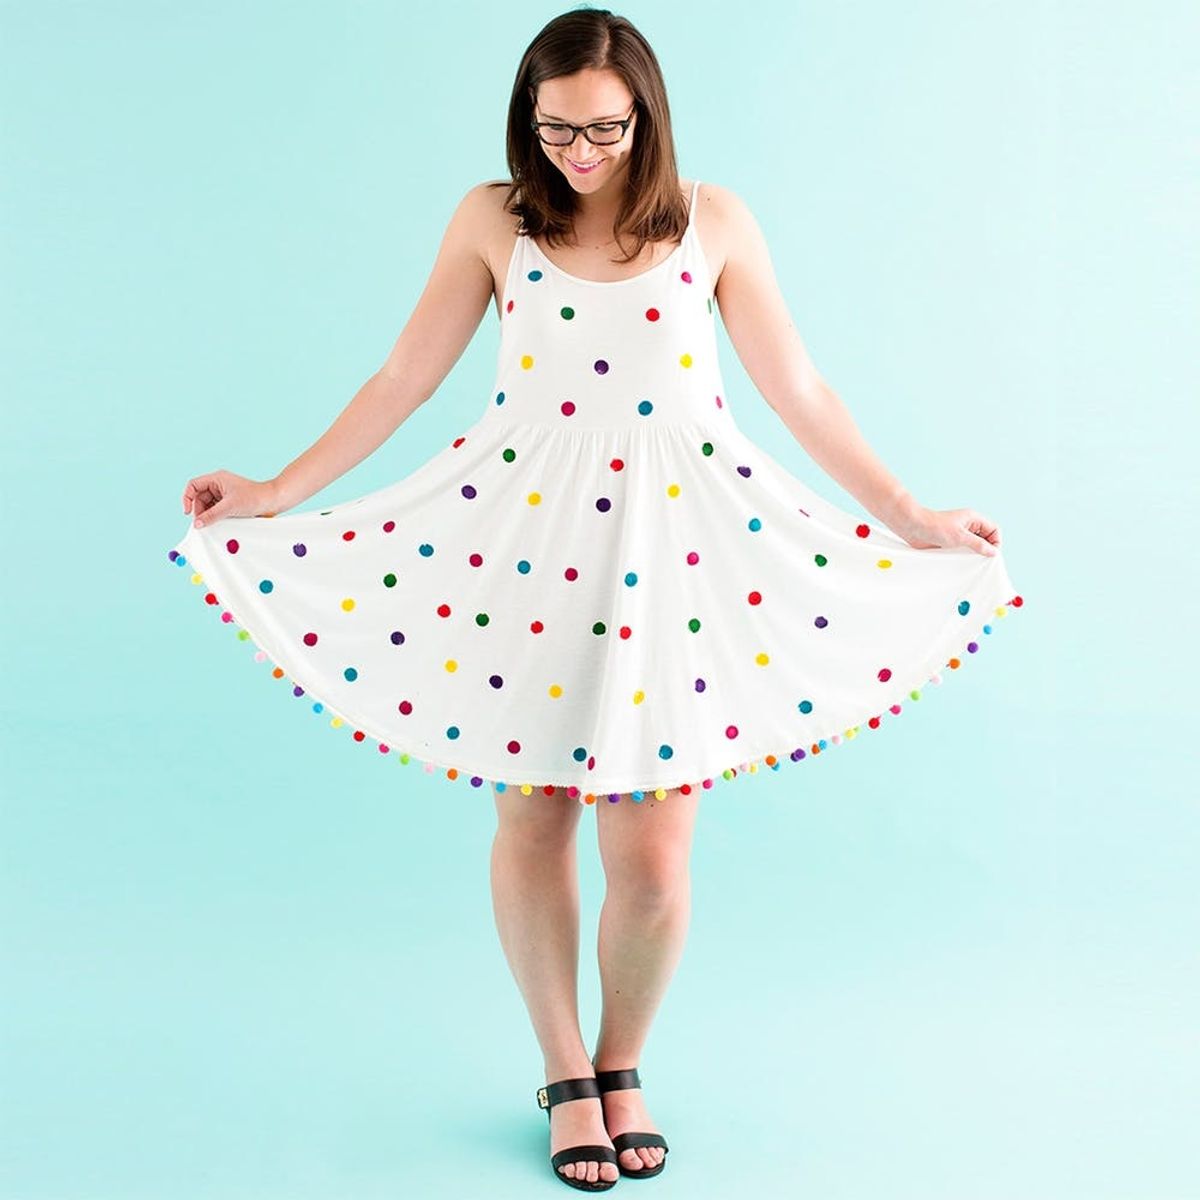 DIY This $100 Polka Dot Dress for Less Than $50